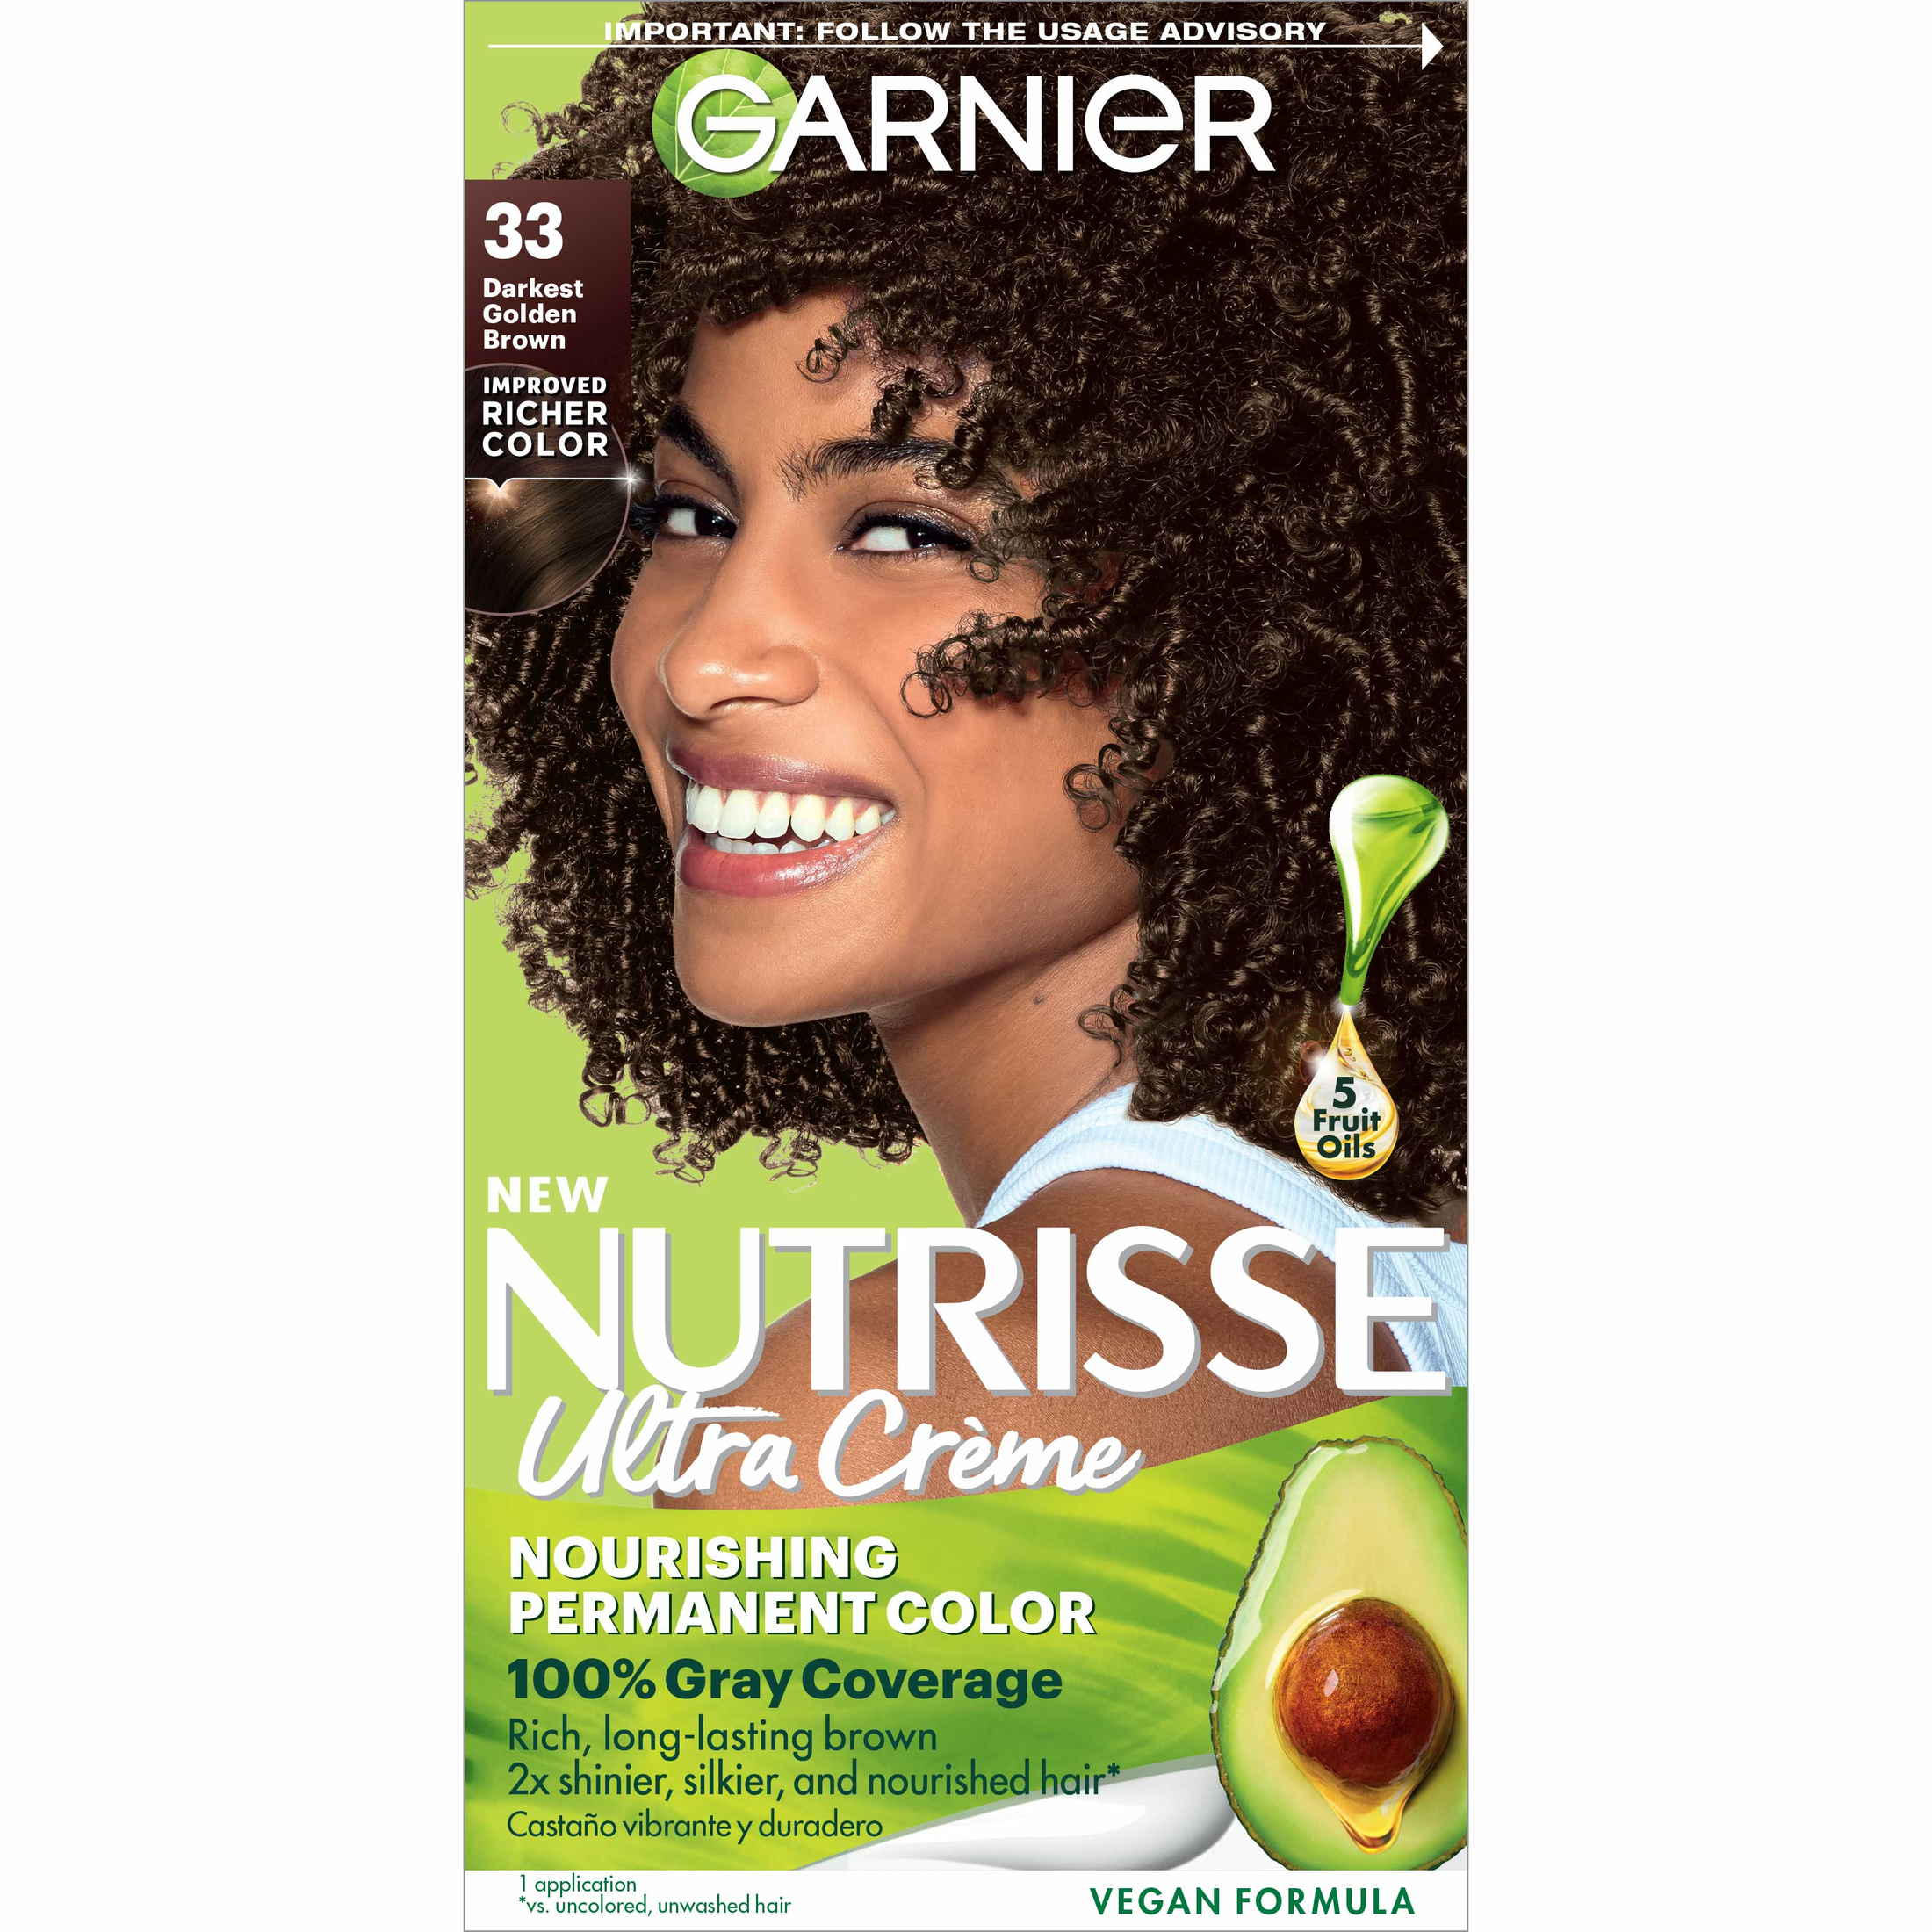 Garnier Nutrisse Nourishing Hair Color Creme, 33 Darkest Golden Brown - image 1 of 11